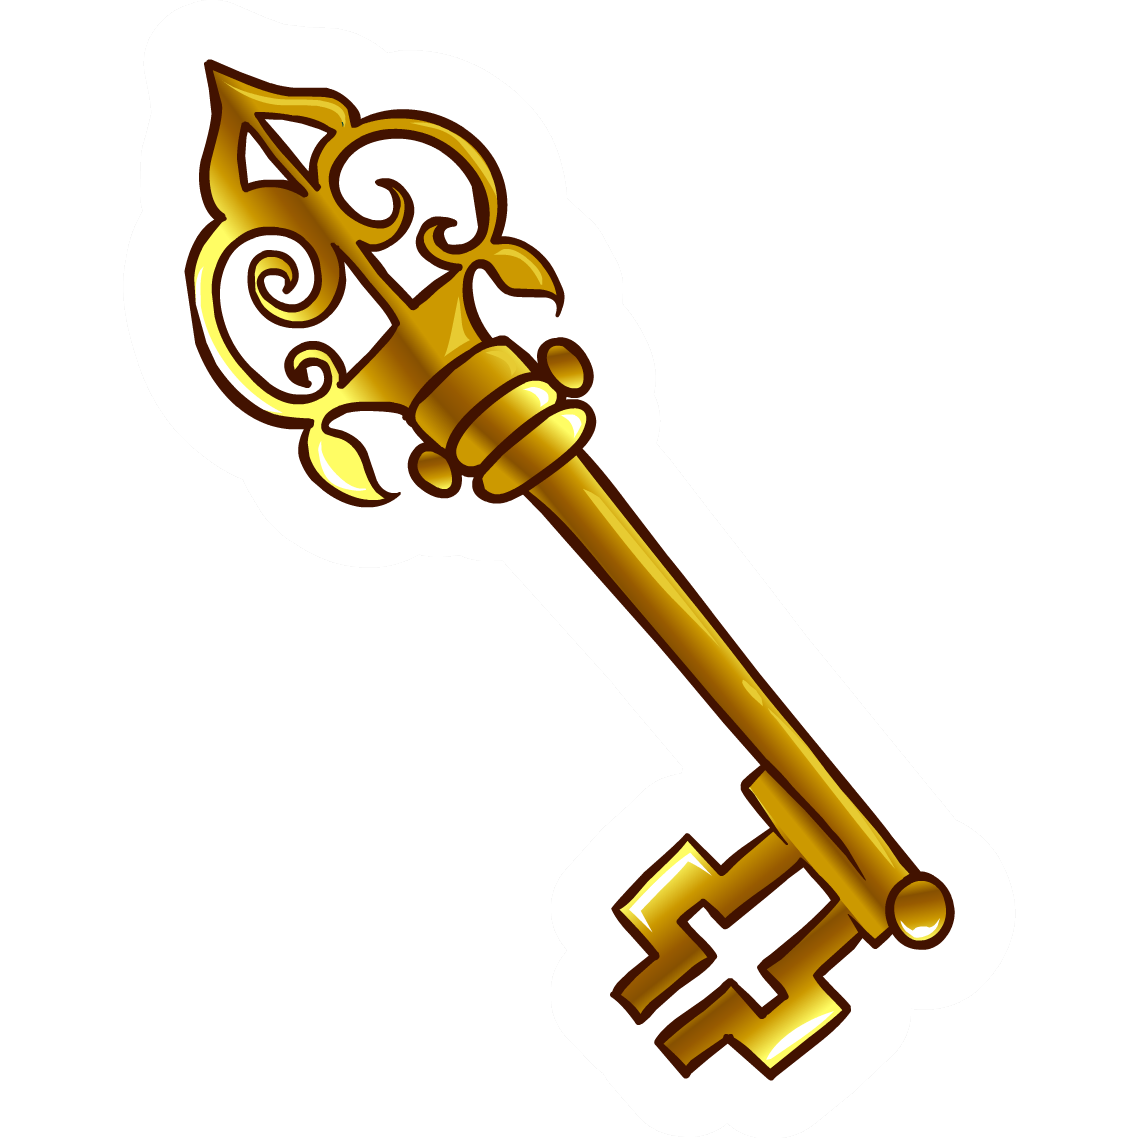 golden key PNG image, free